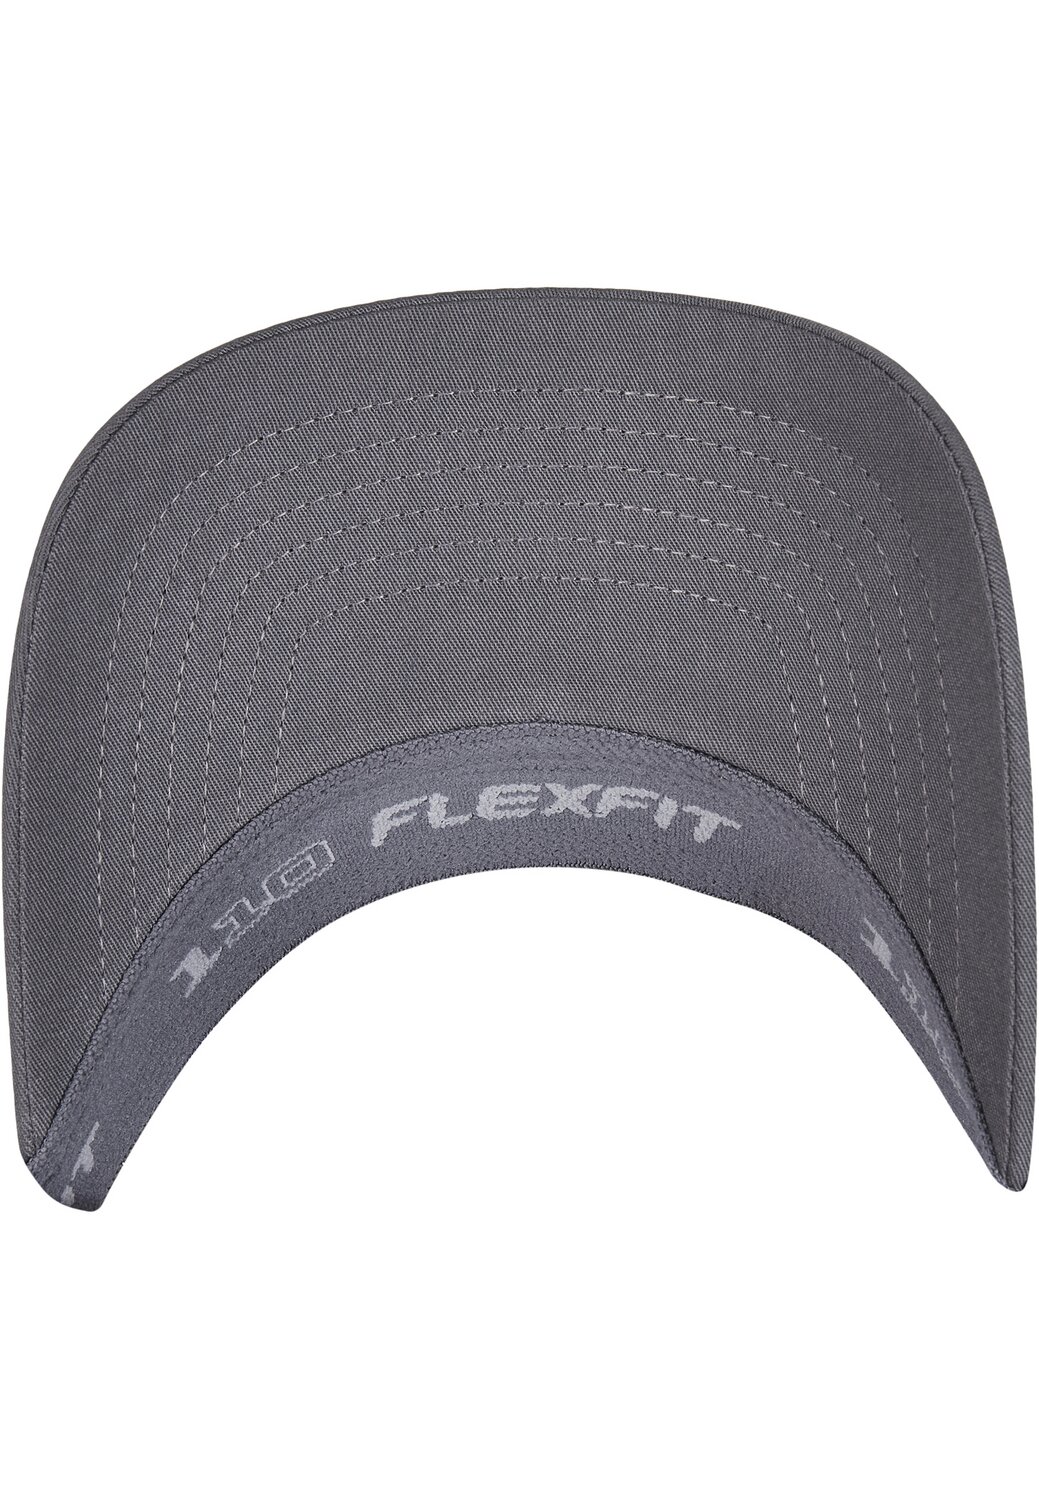 Trucker Cap 110 | MAXISCOOT Flexfit grey/melange Melange